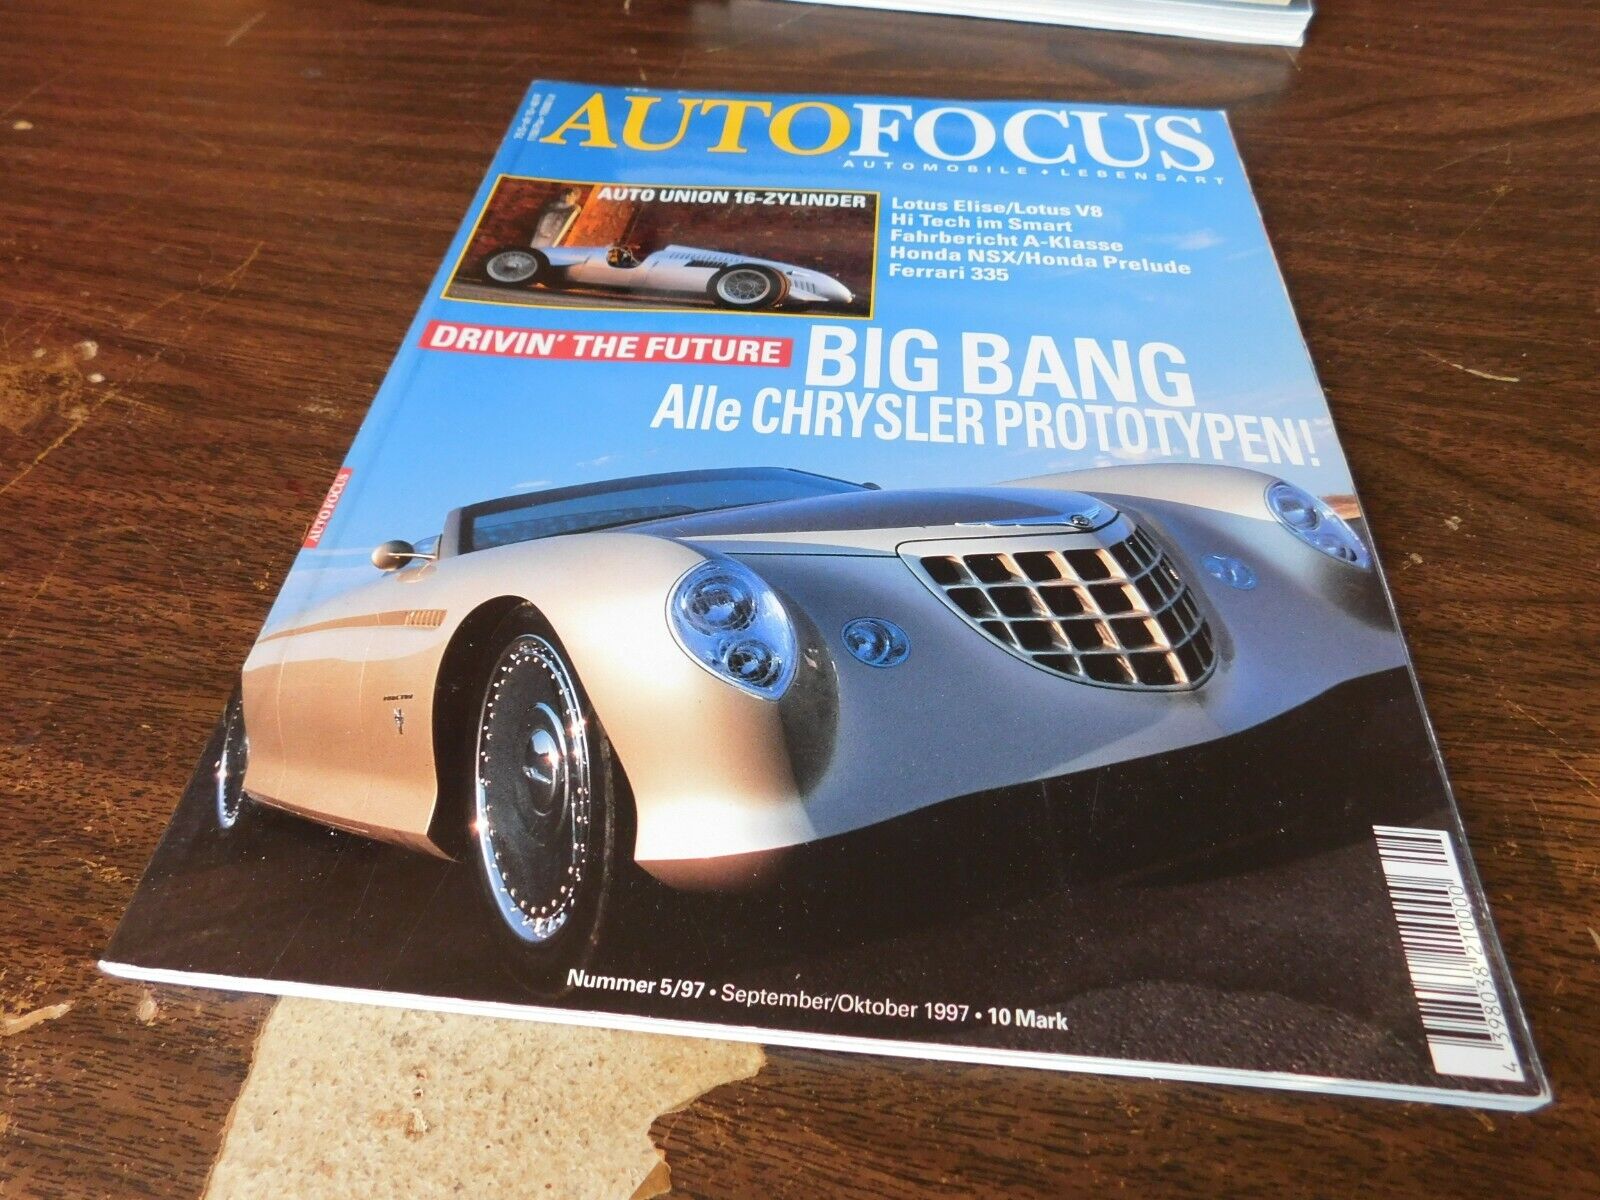 Auto Focus Automobile Magazine Prototypen Chrysler September October 1997